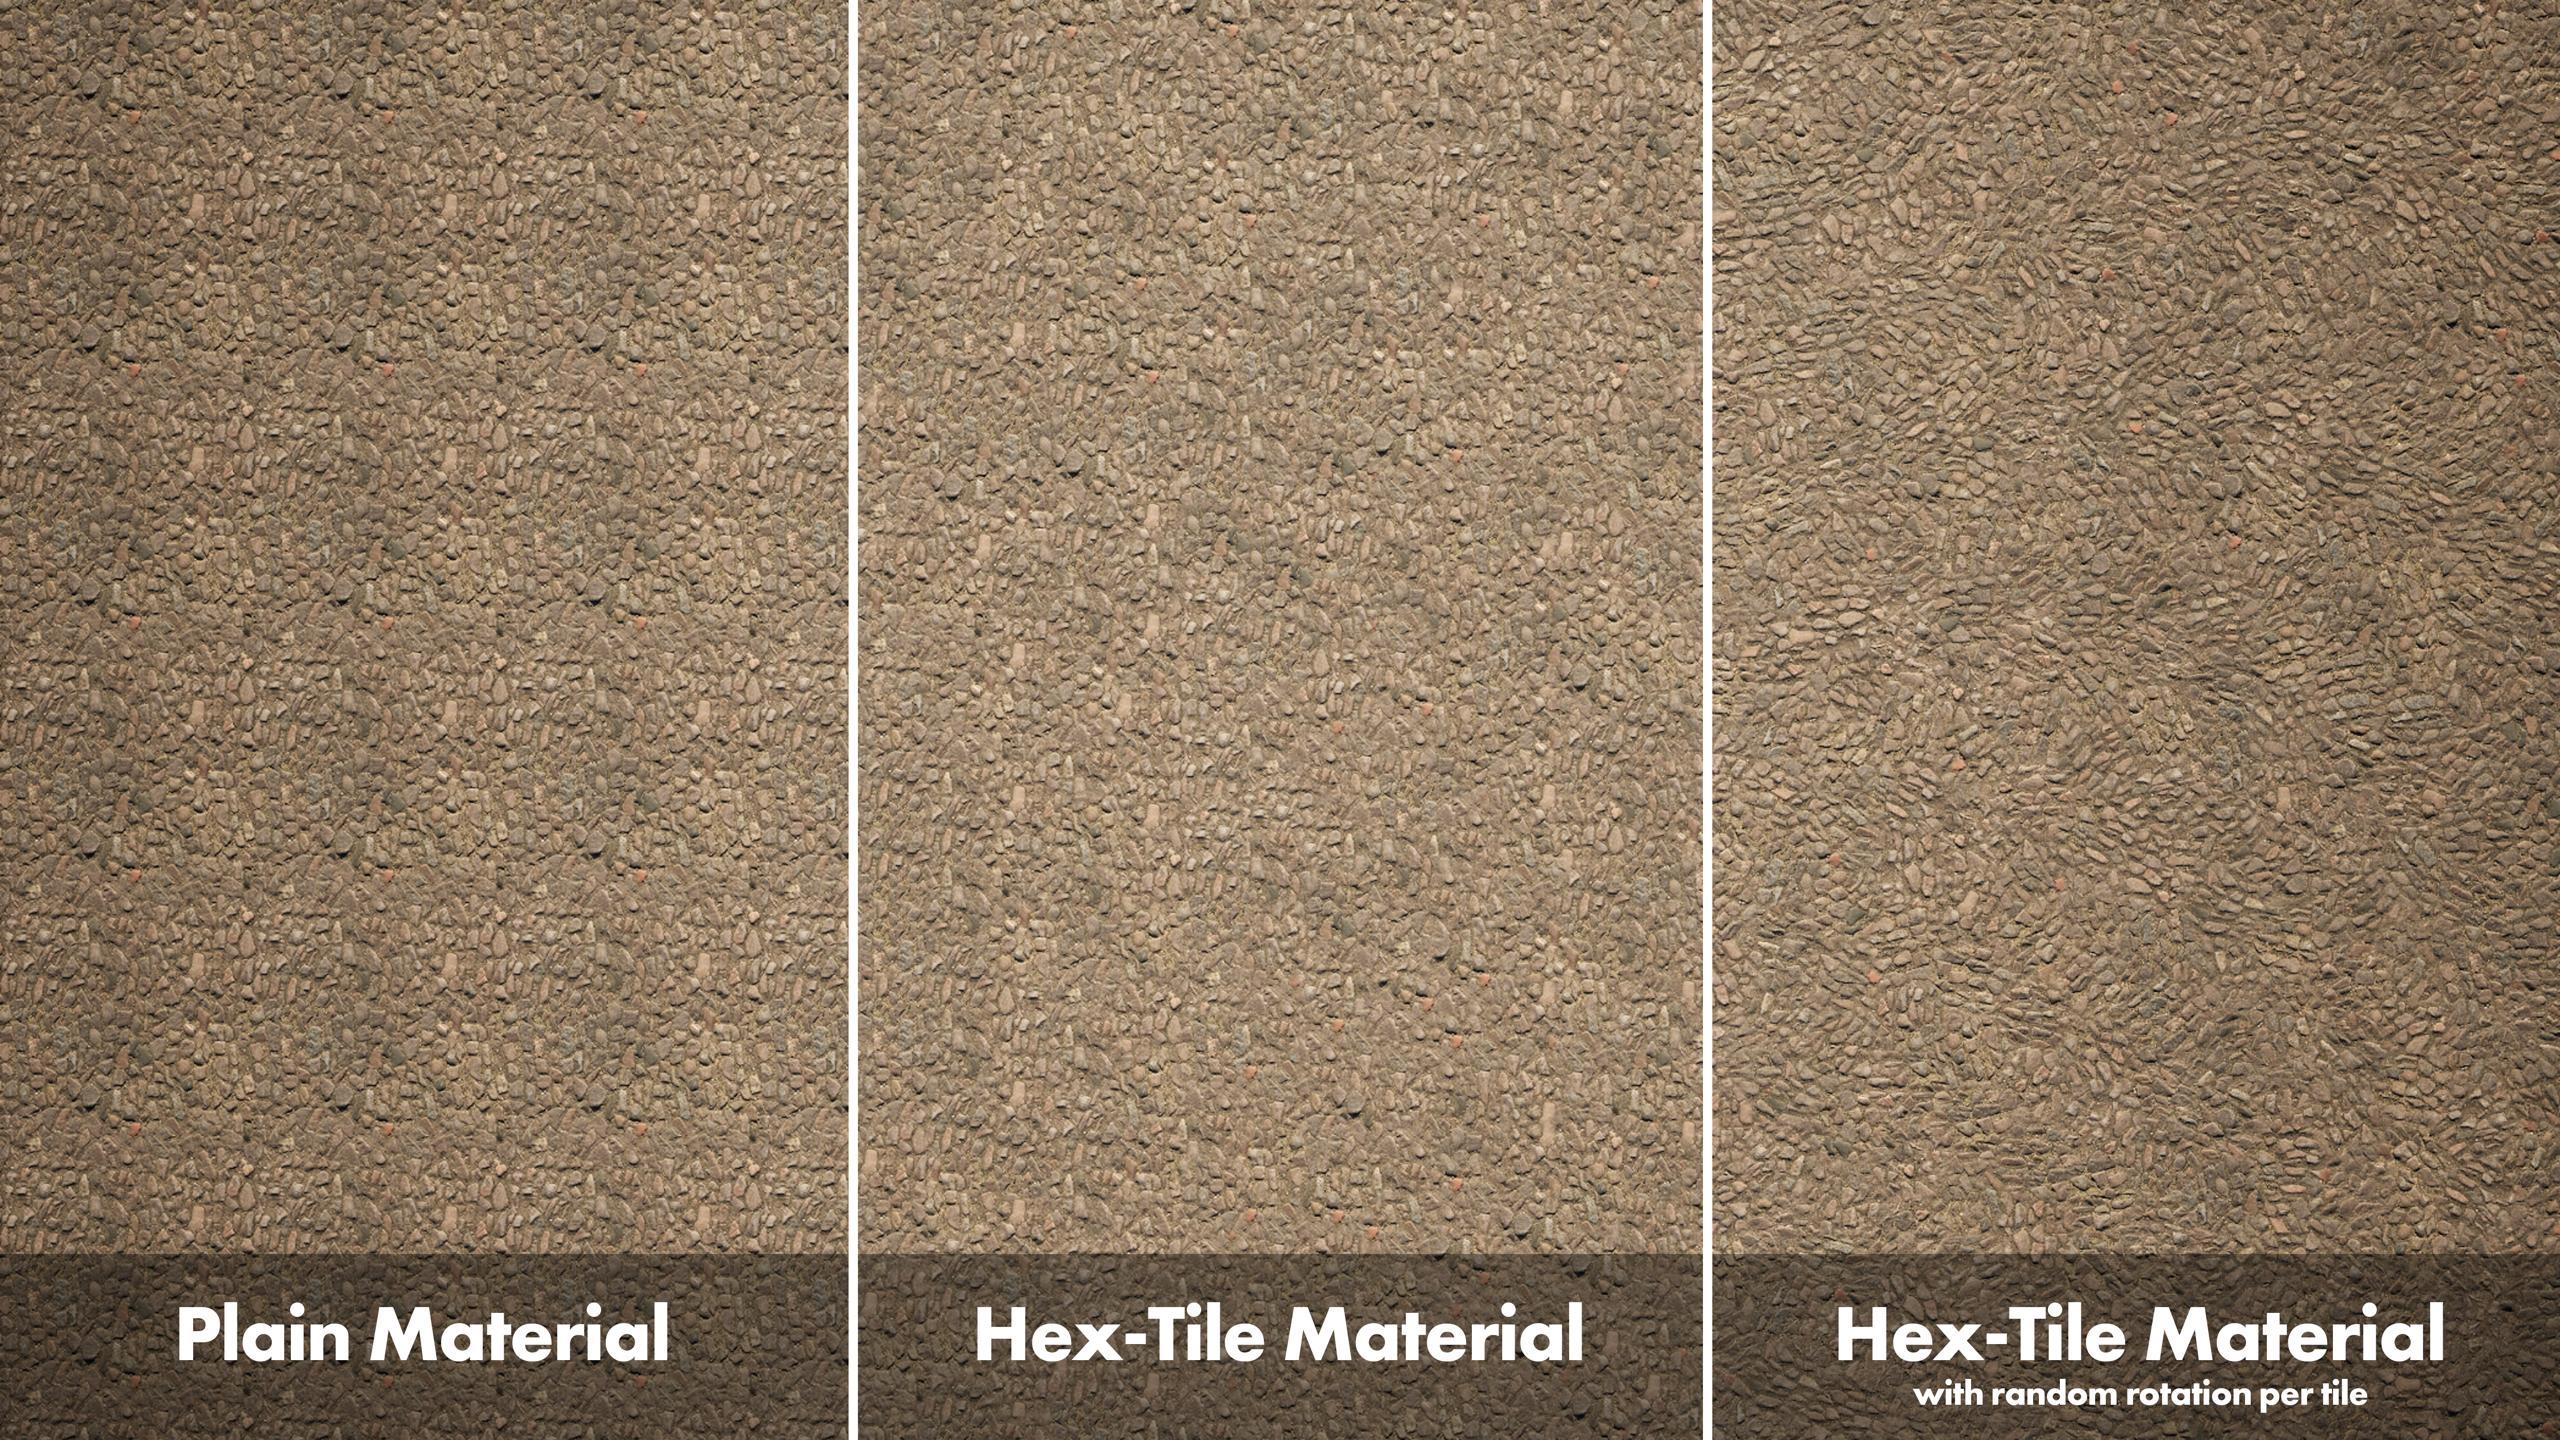 Comparison of hextile material vs regular material